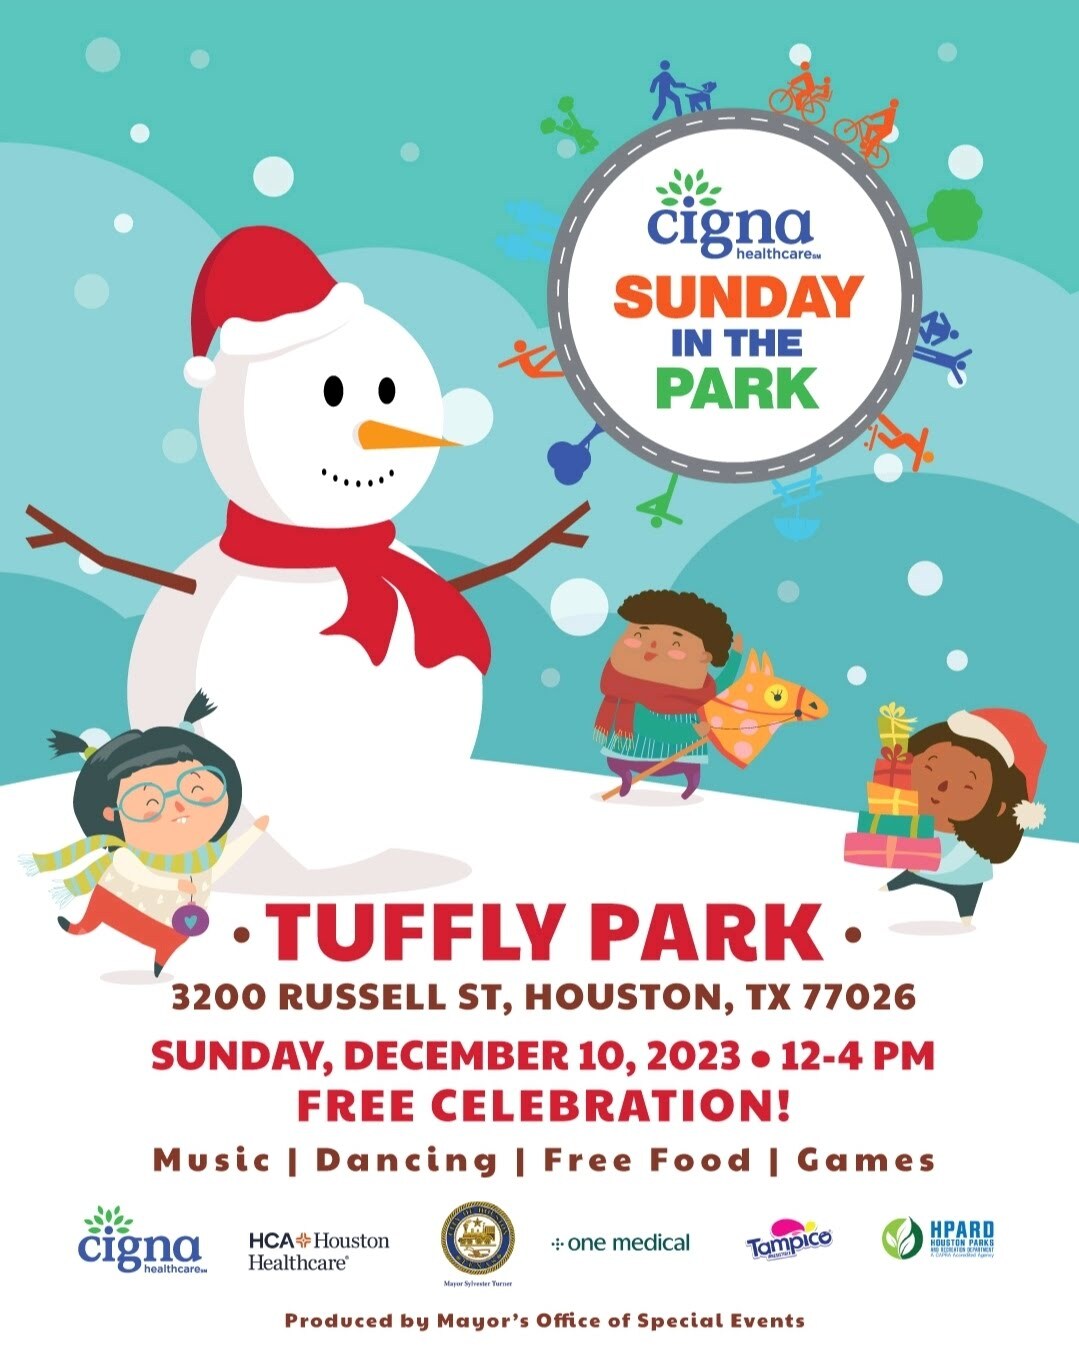 Cigna Sunday in the Park: December 10, 2023